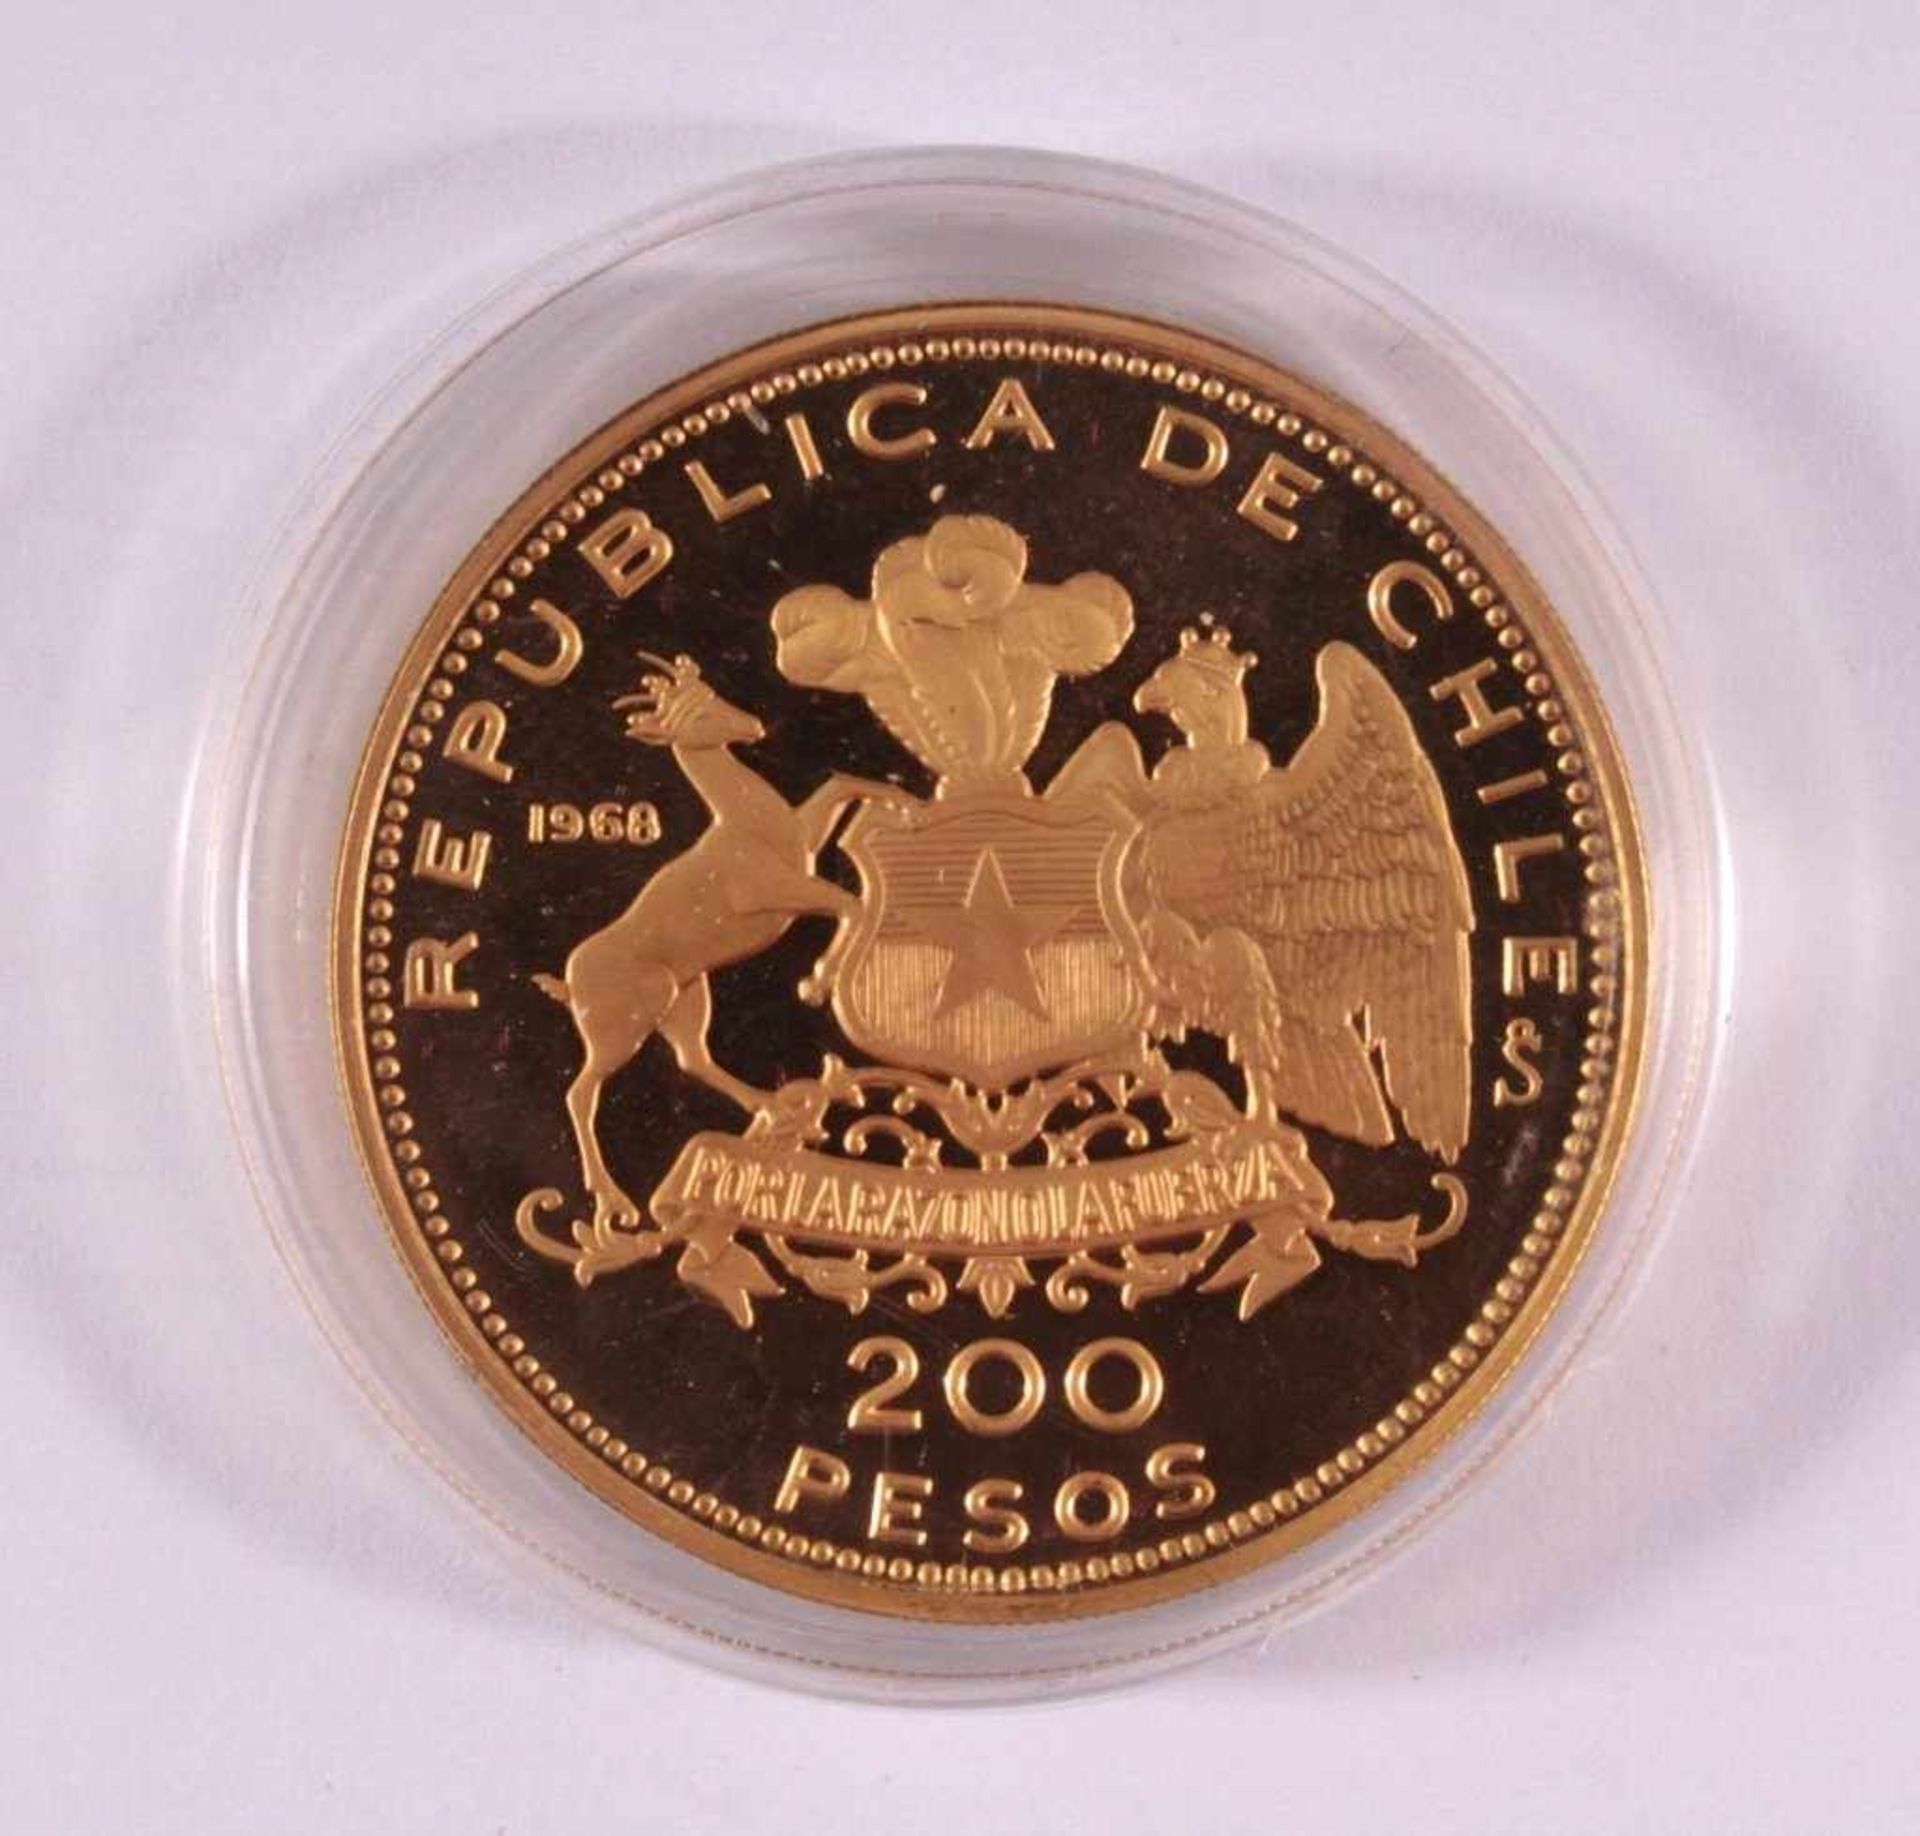 200 Pesos Chile 1968900er Gold, D-4 cm, 40,7 g - Image 2 of 2